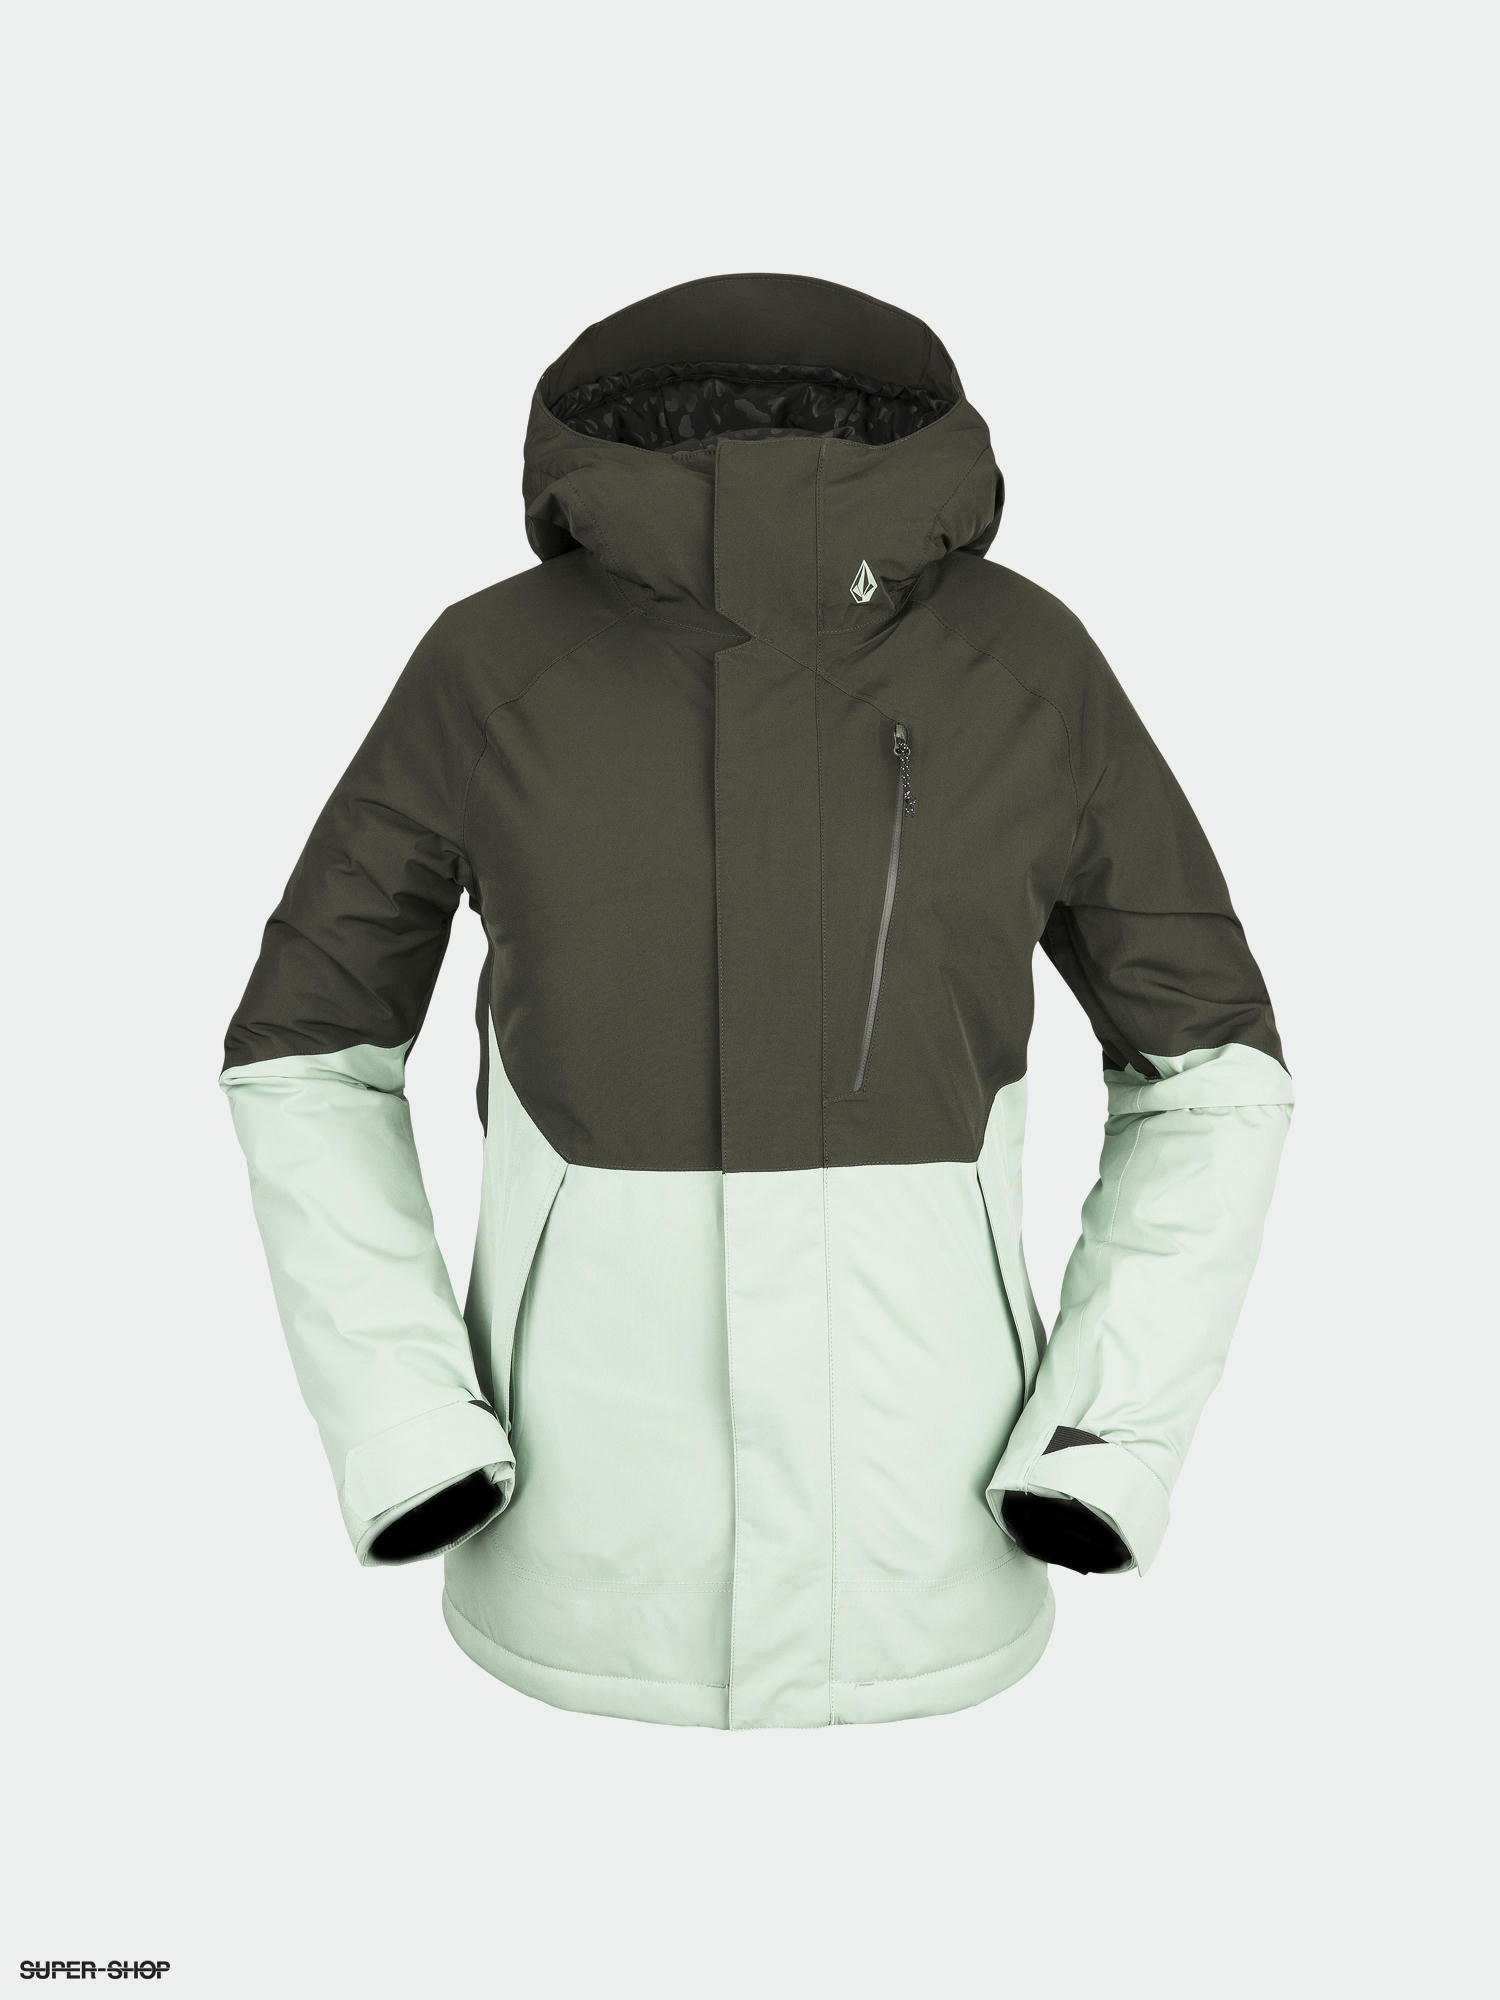 Mint Green Snowboard Jacket Shop | bellvalefarms.com